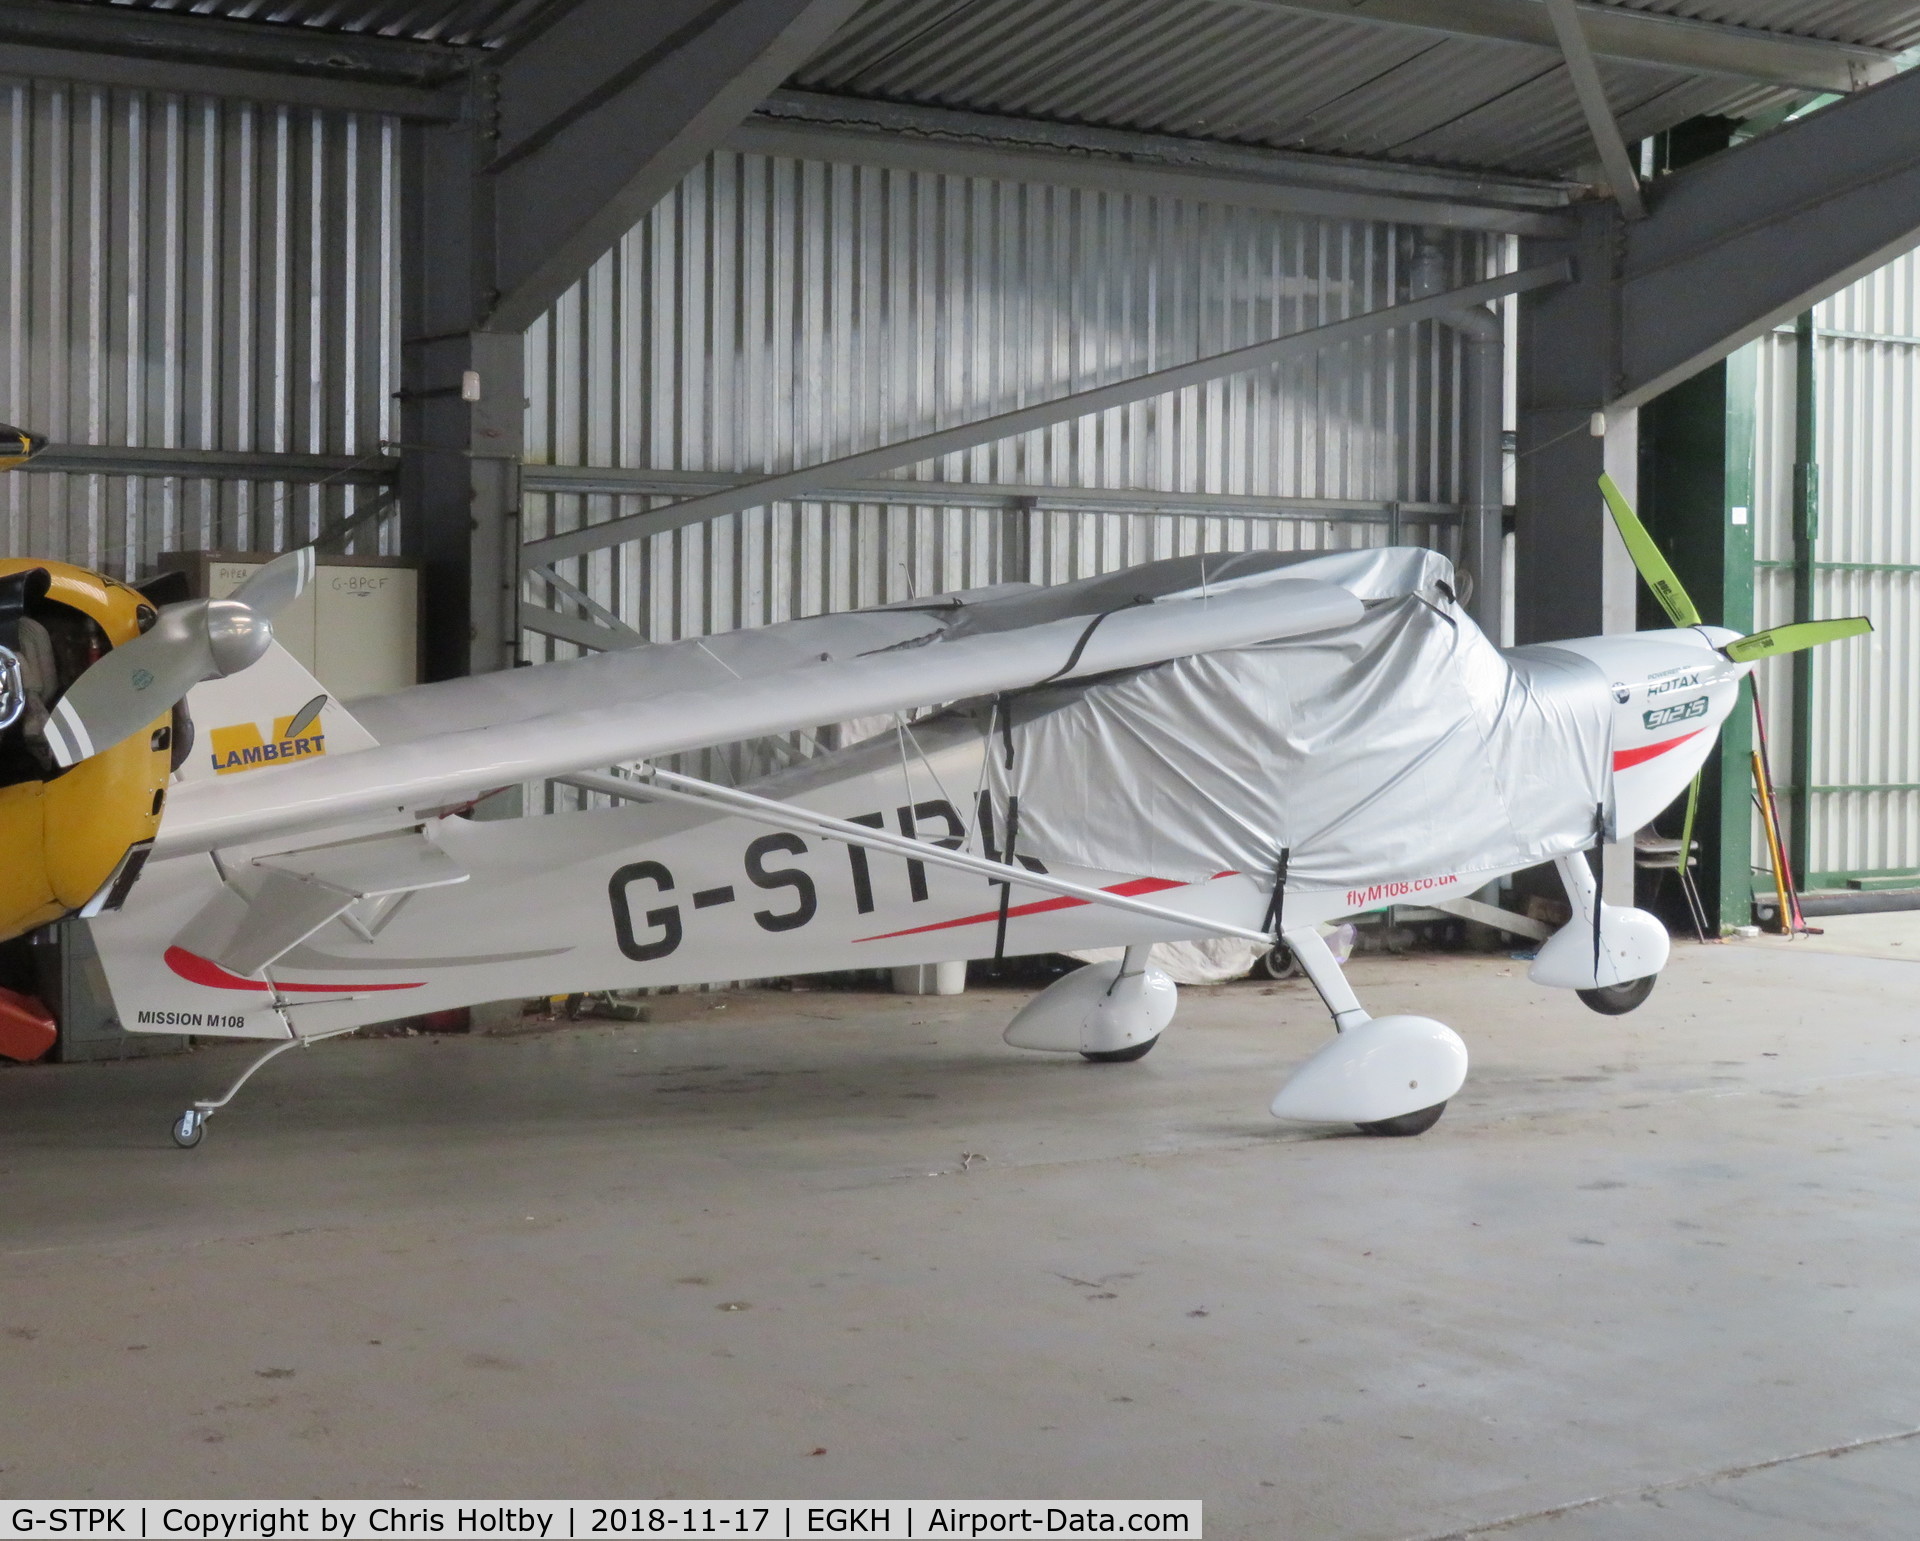 G-STPK, 2012 Lambert Mission M108 C/N LAA 370-15092, Covered and stored in Headcorn hangar